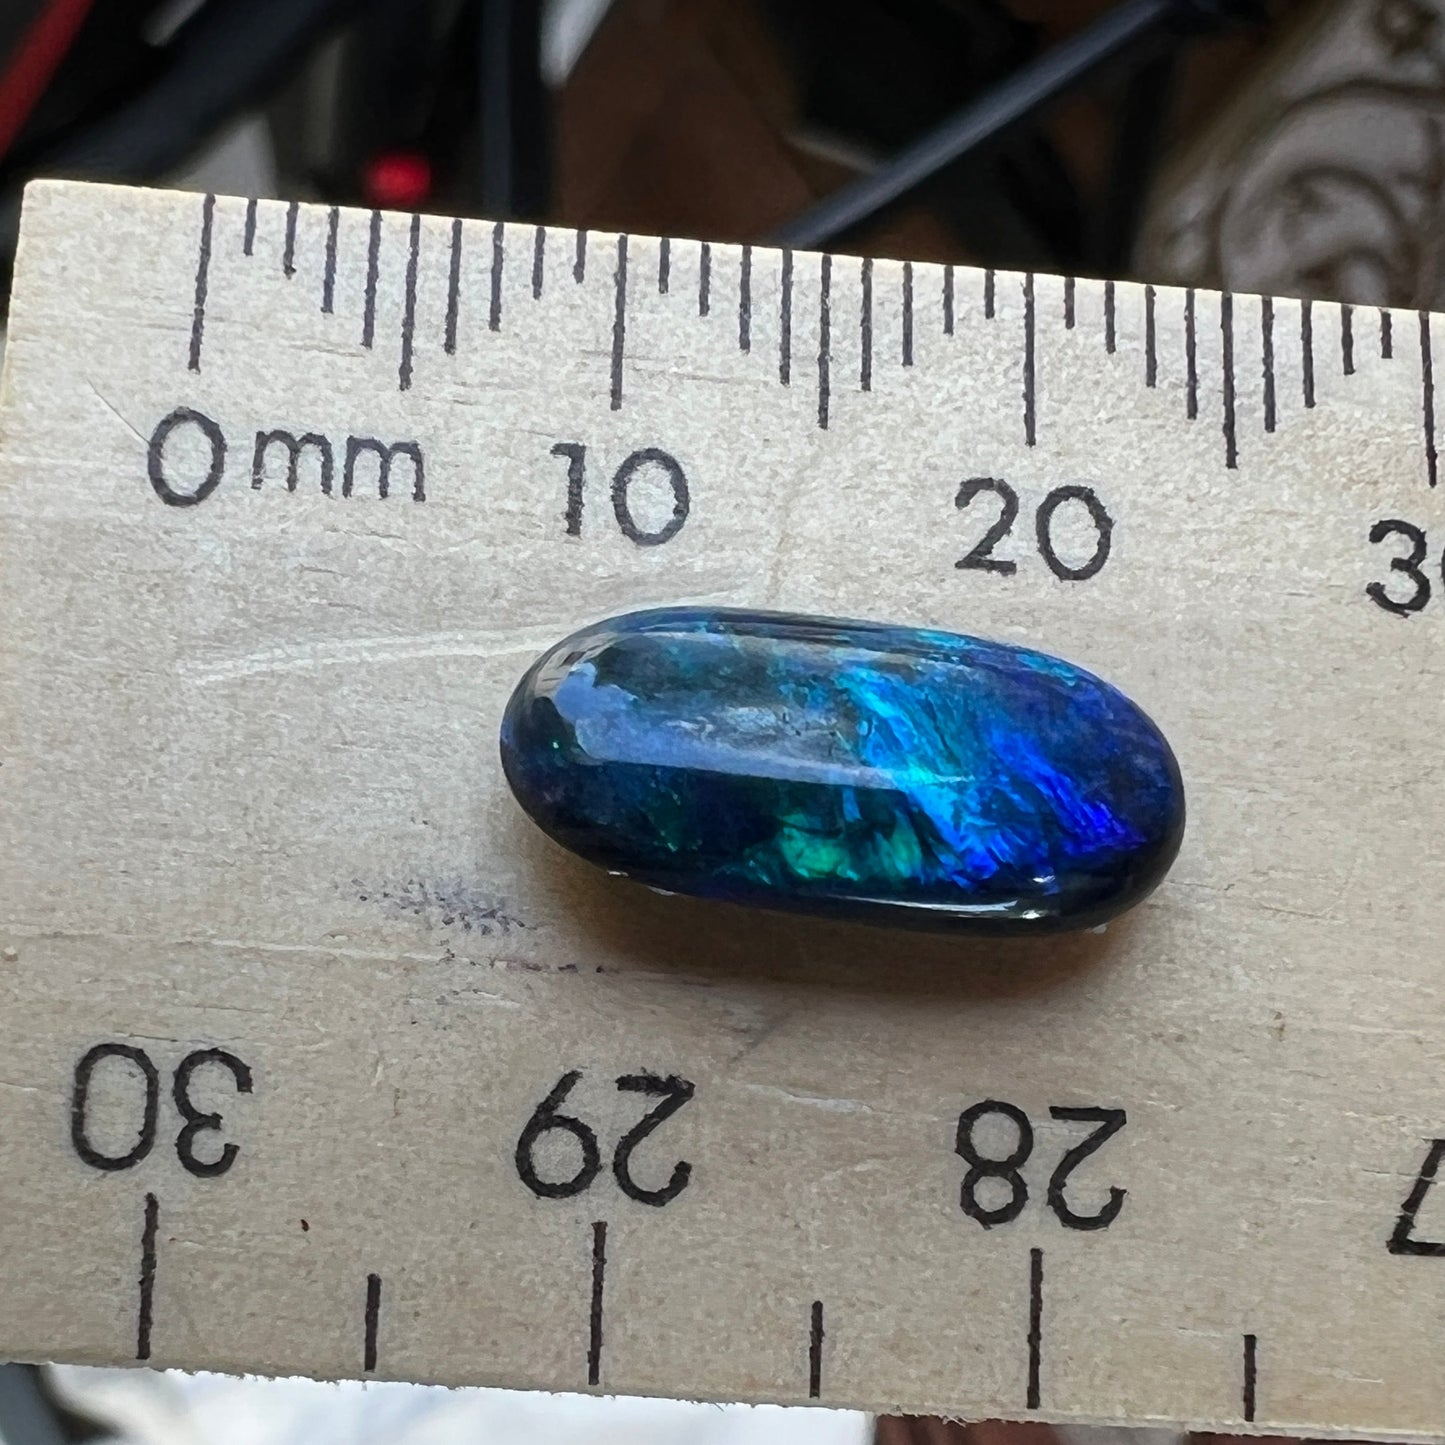 Lightning Ridge black opal displaying beautiful blues. Ready for setting.